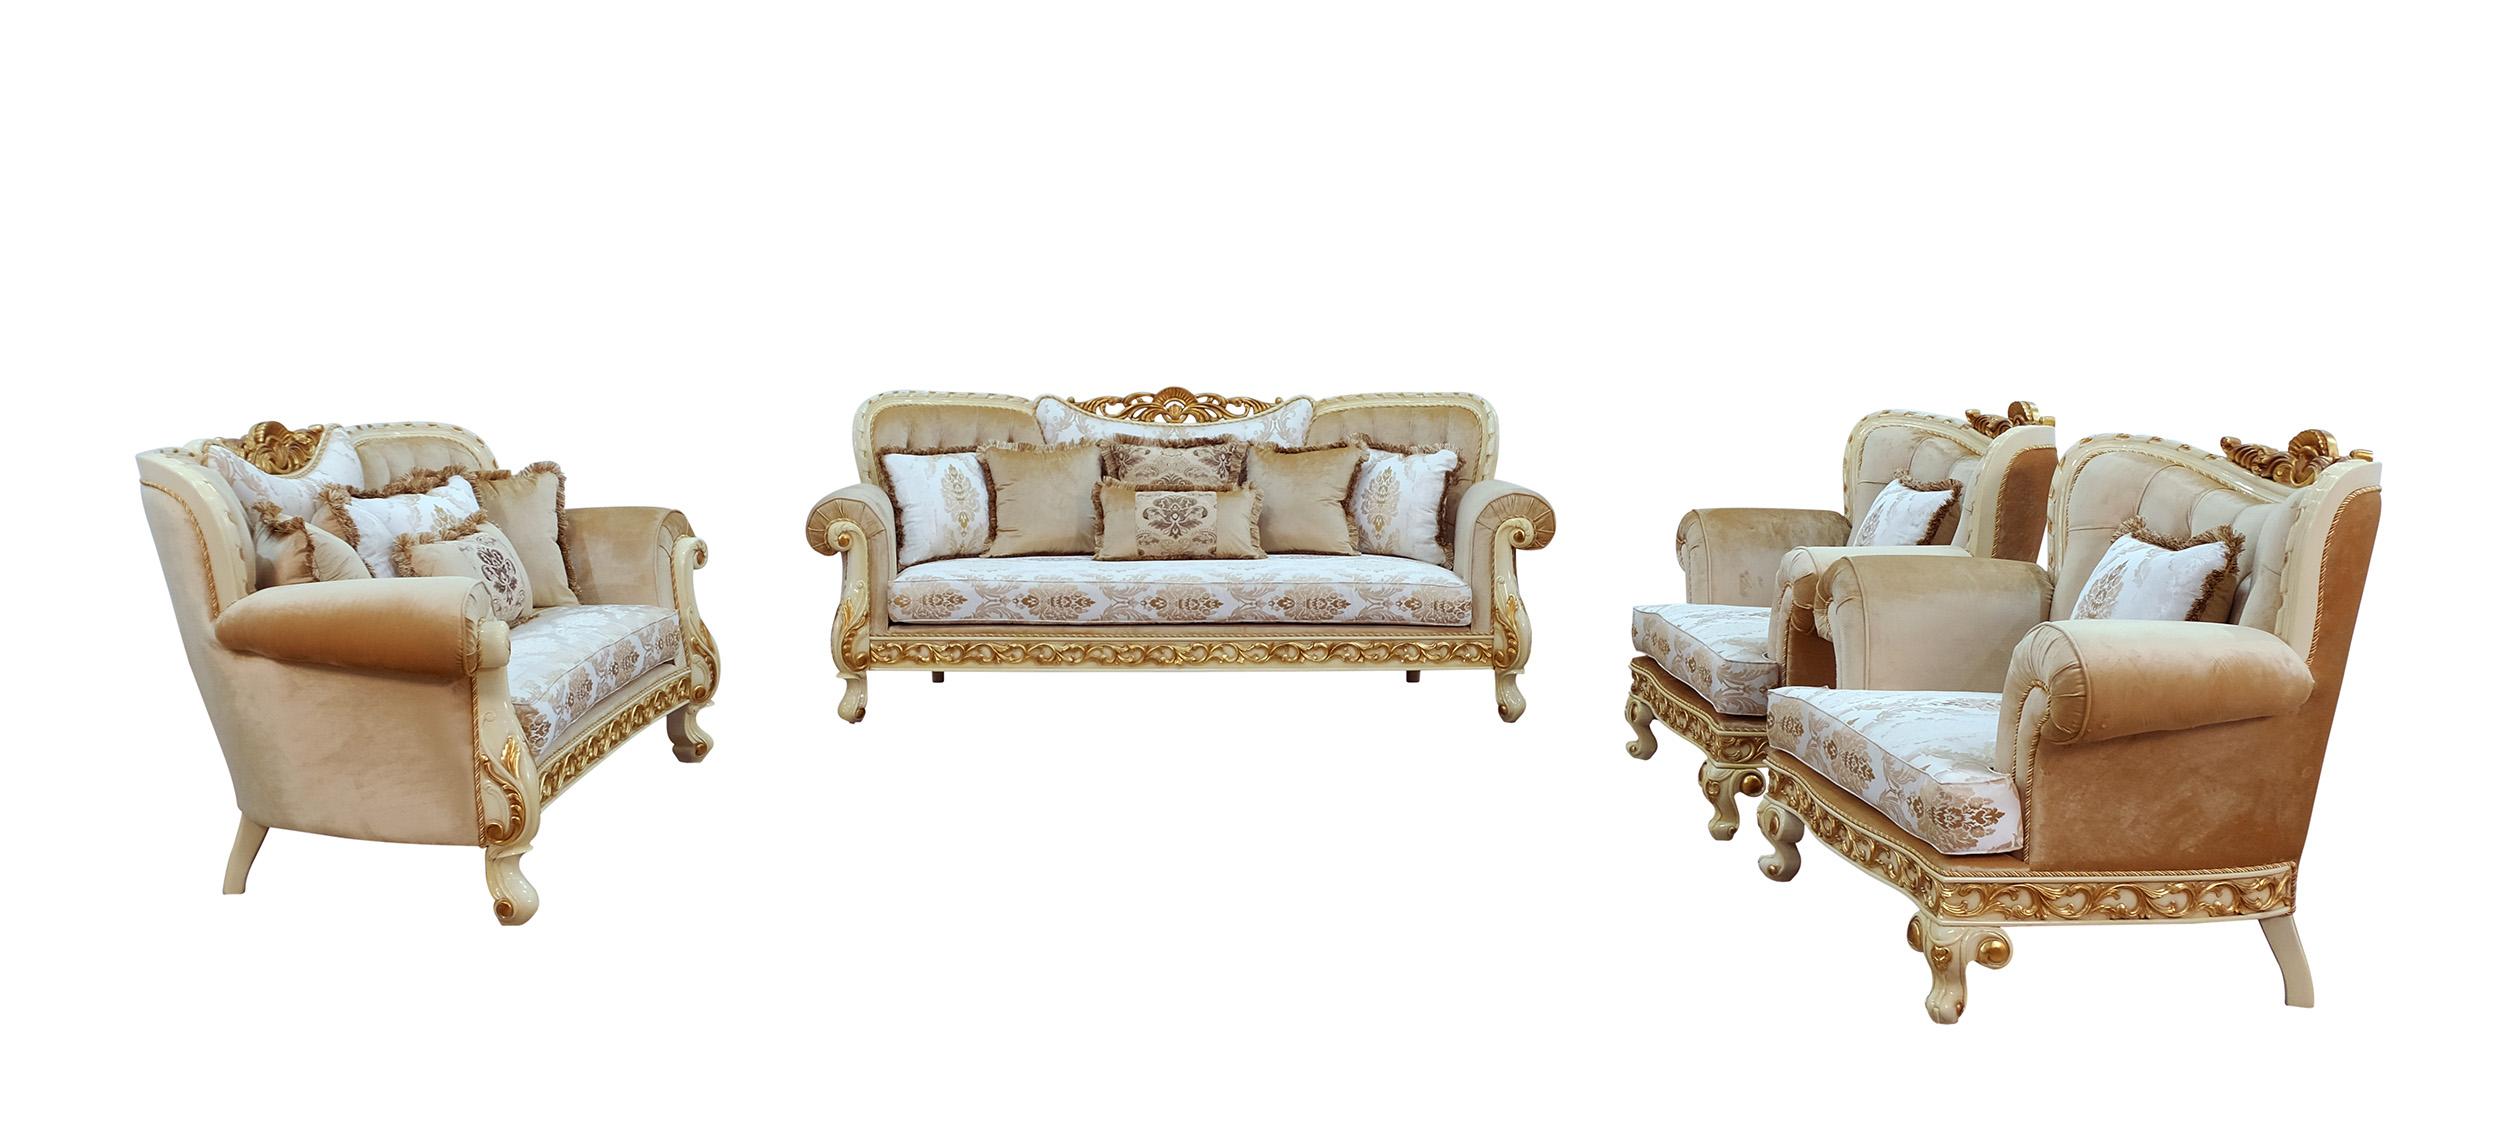 Classic, Traditional Sofa Set FANTASIA 40015-Set-4 in Off-White, Sand, Gold Fabric